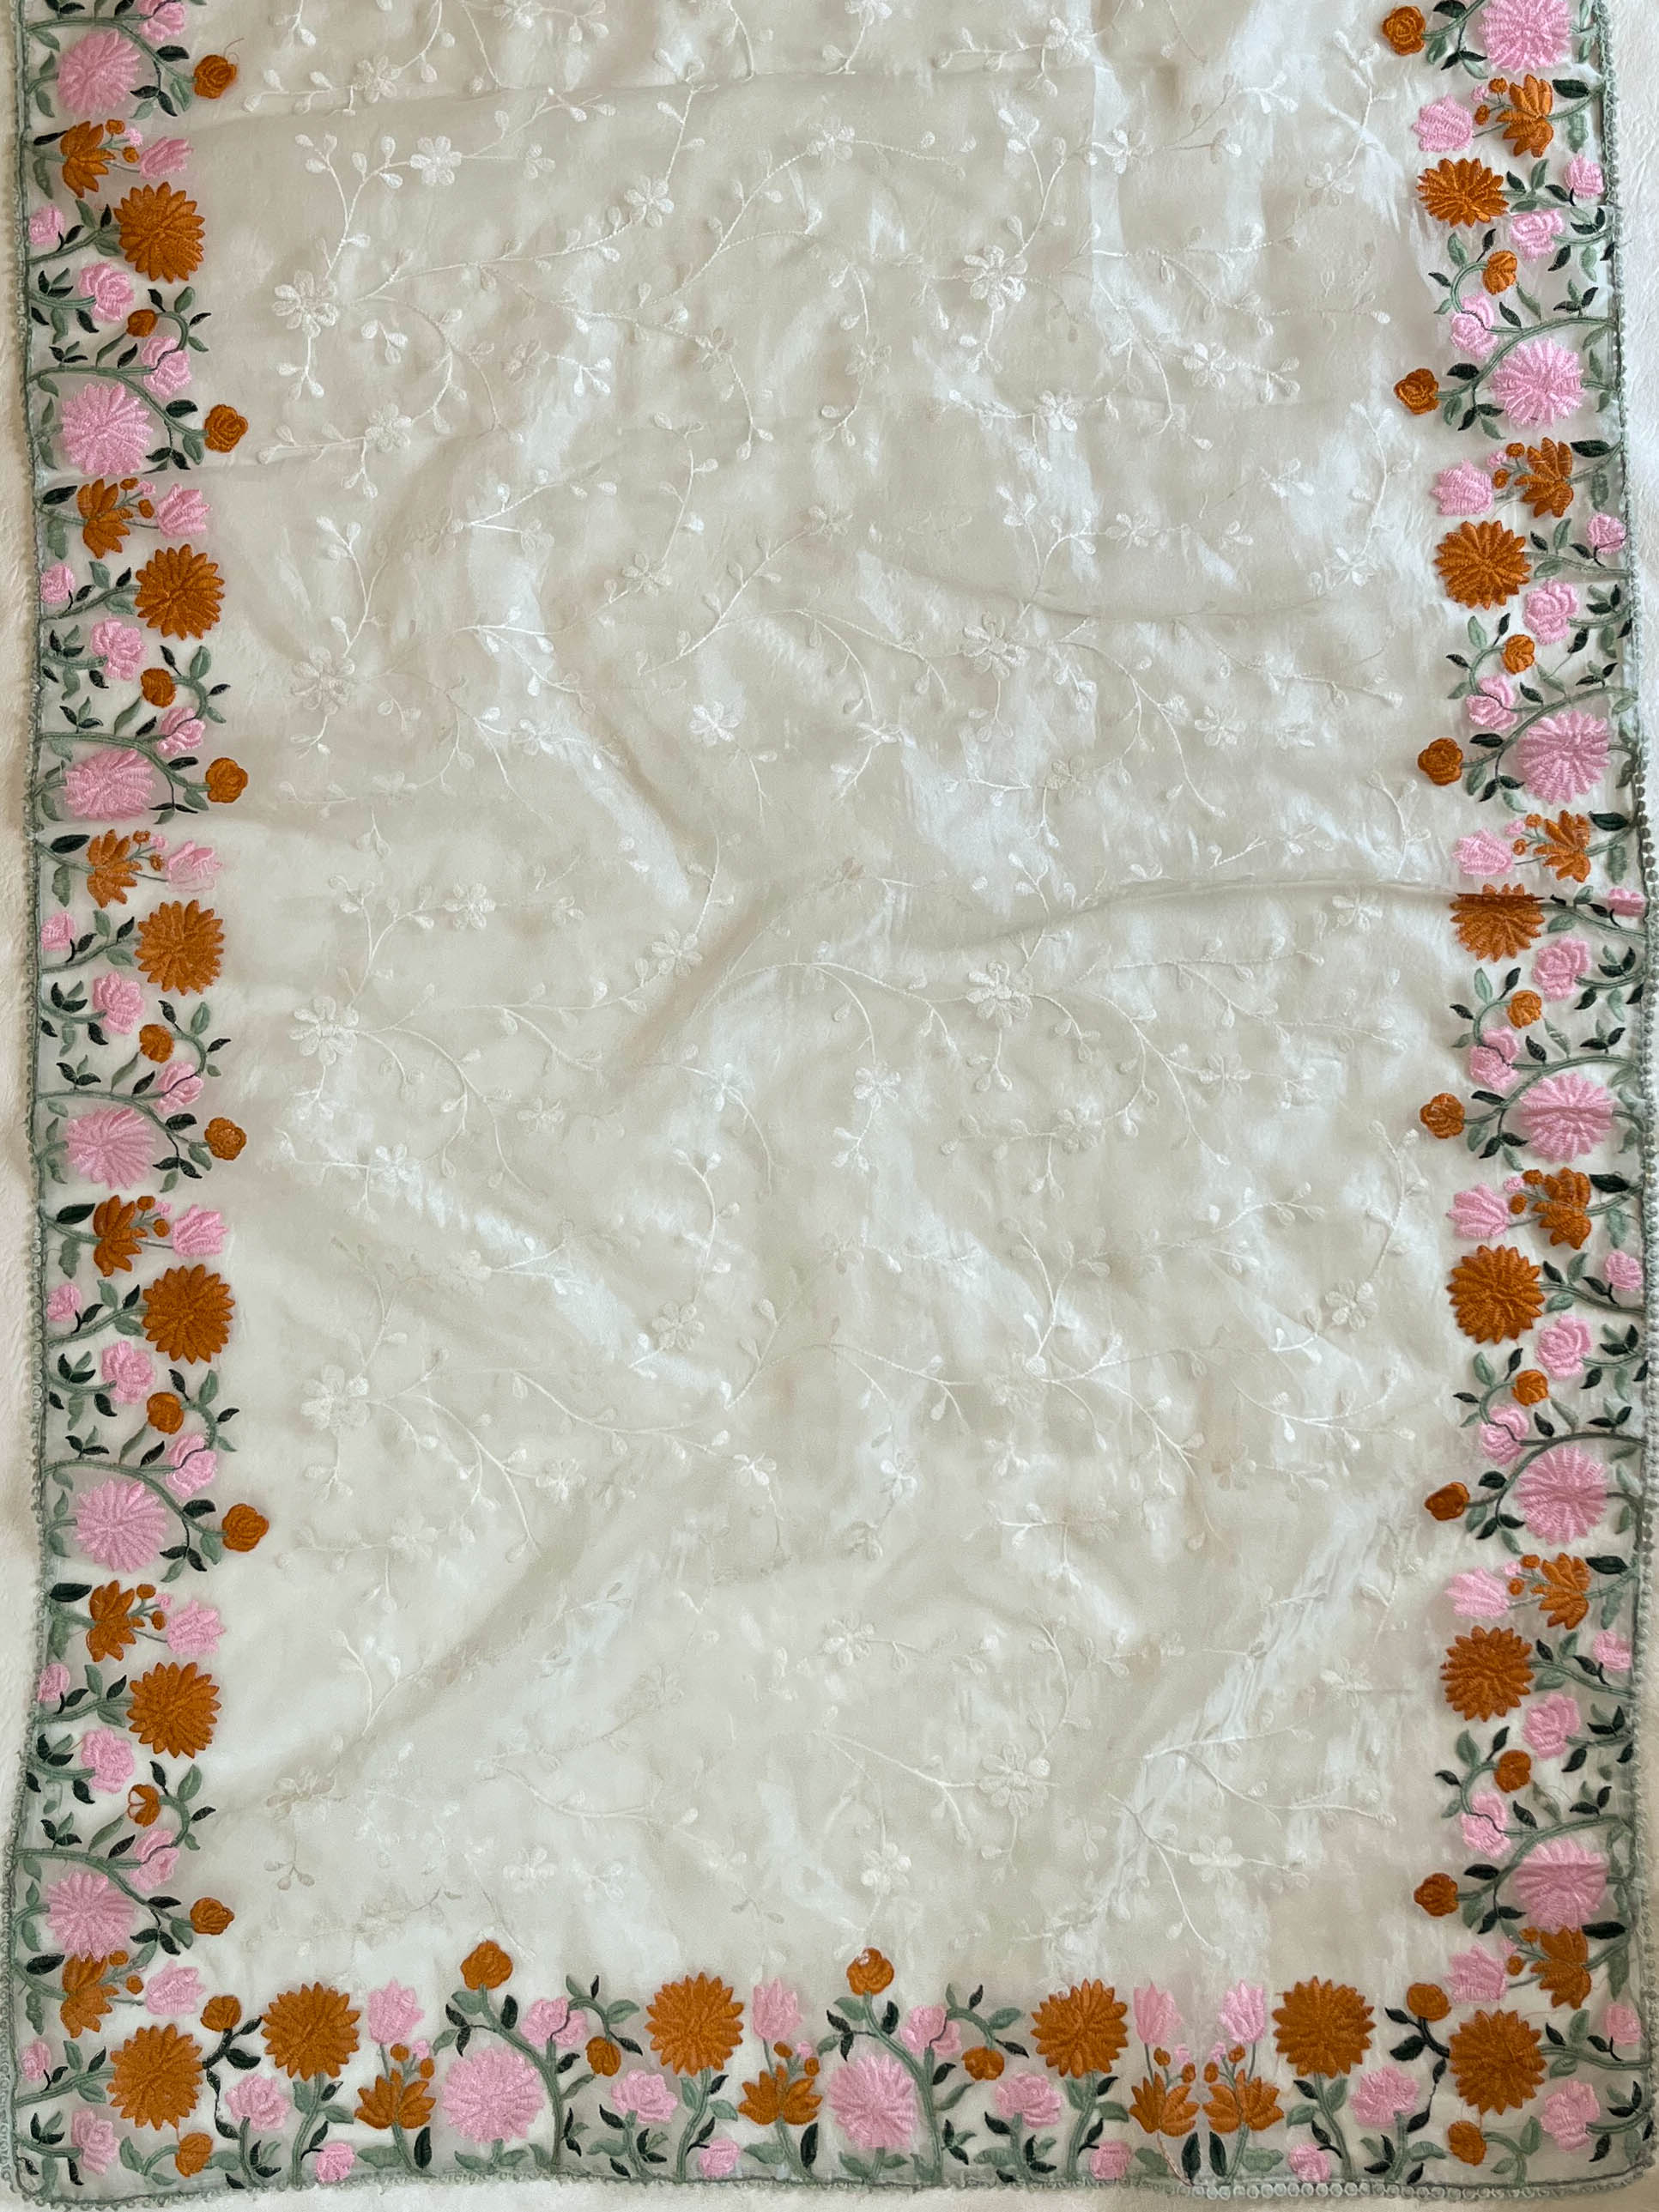 Banarasee Handwoven Organza Silk Resham Floral Embroidery Saree-Pastel Green